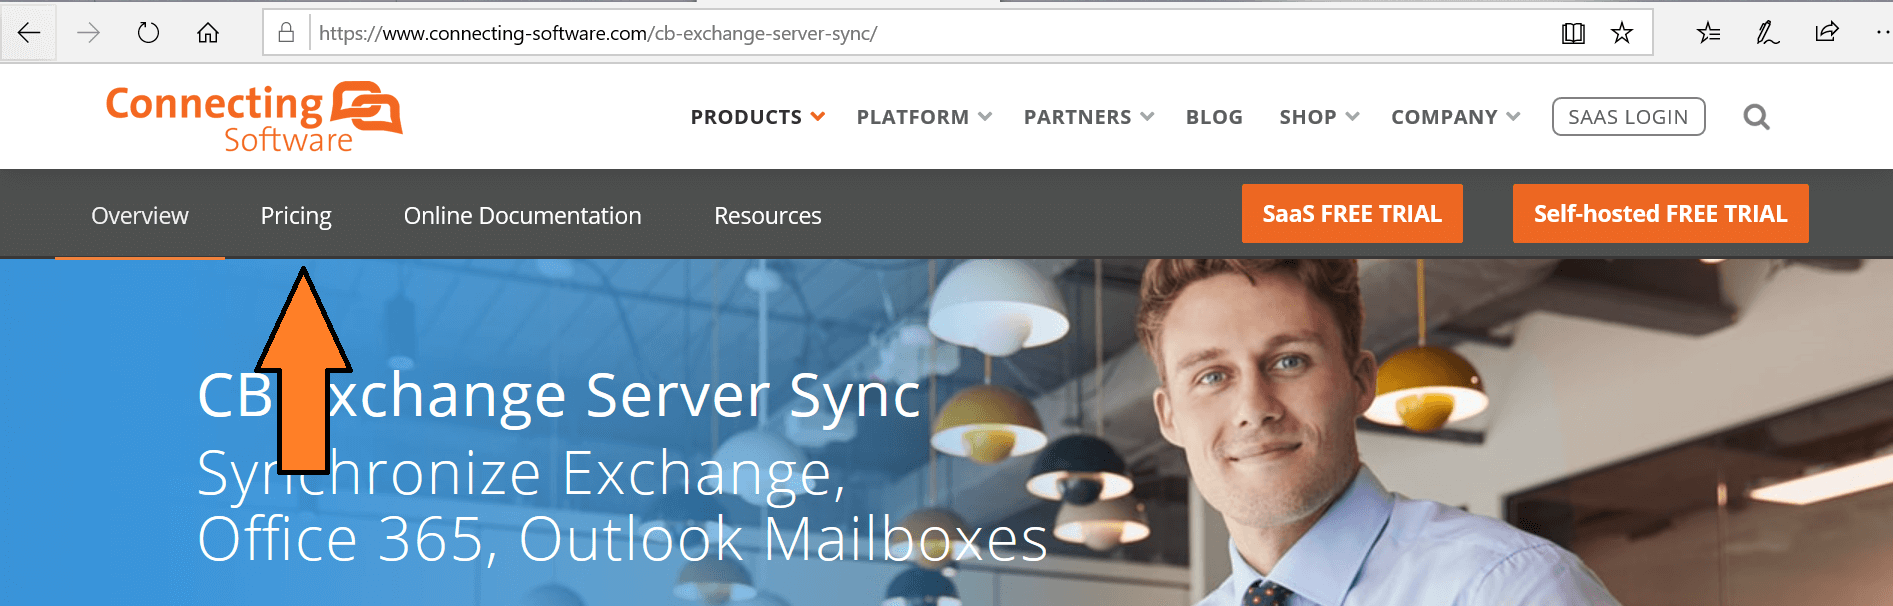 CB Exchange Server Sync Online Documentation